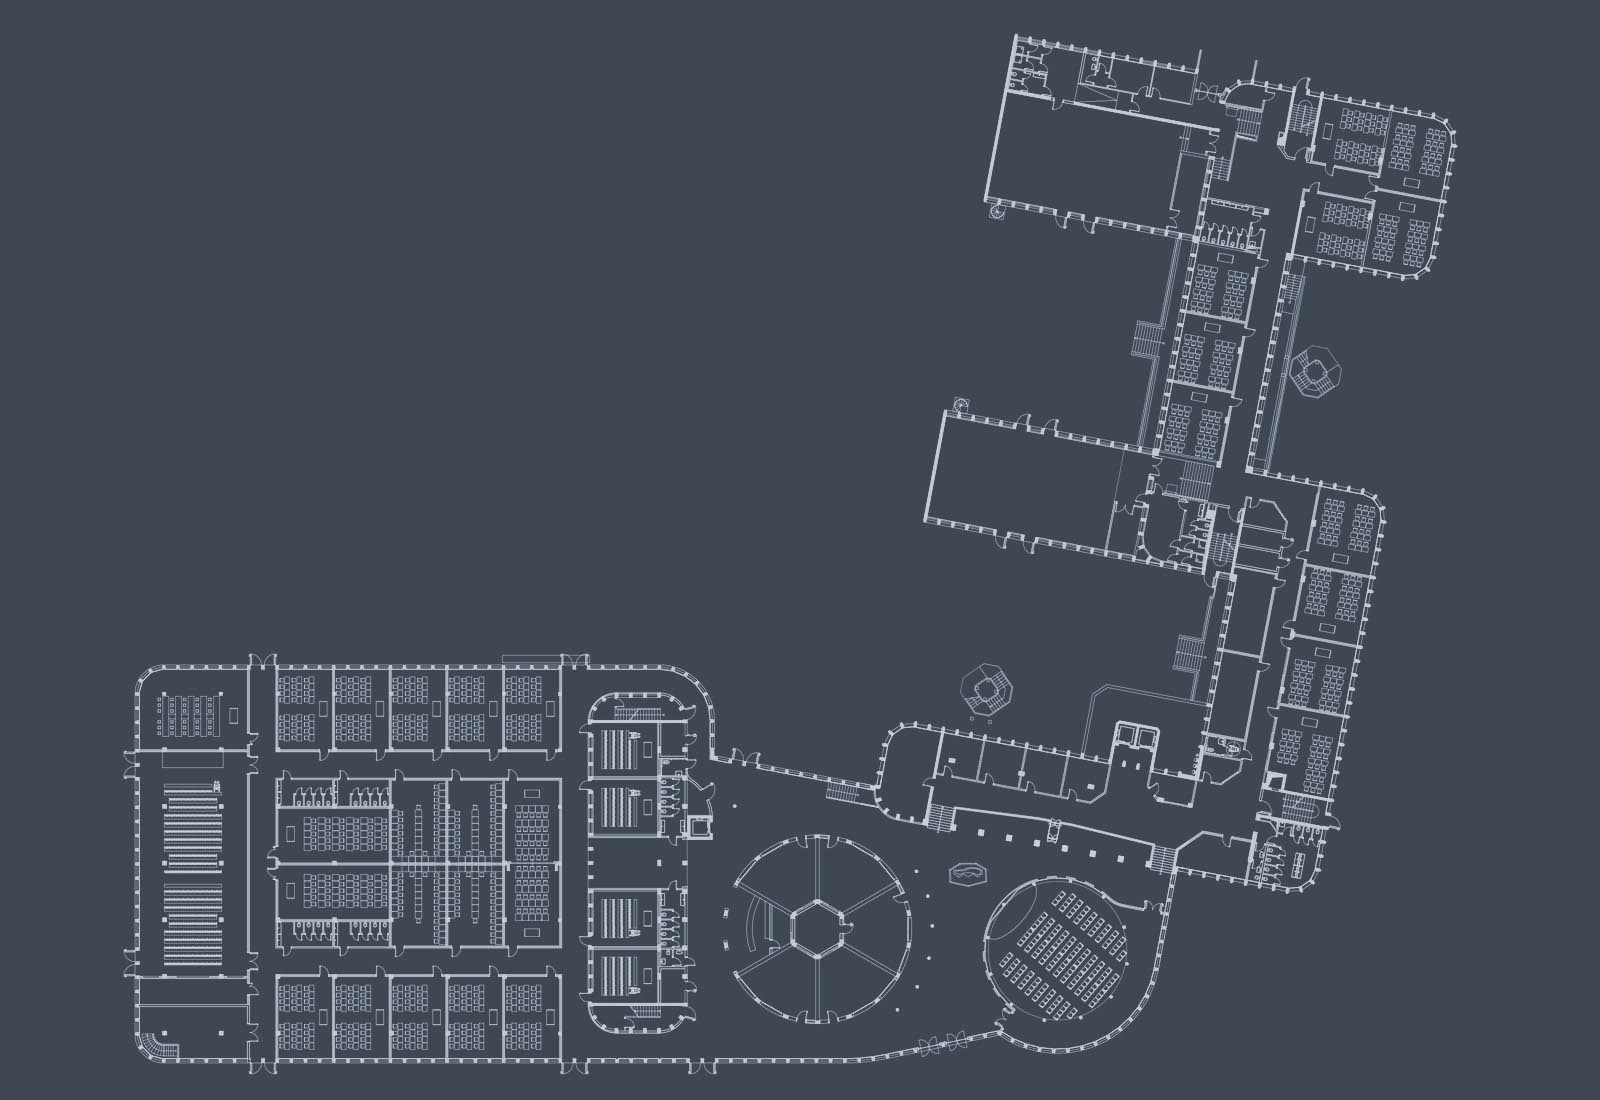 Manzoni school center in Milan - Furnishings plan of ground floor